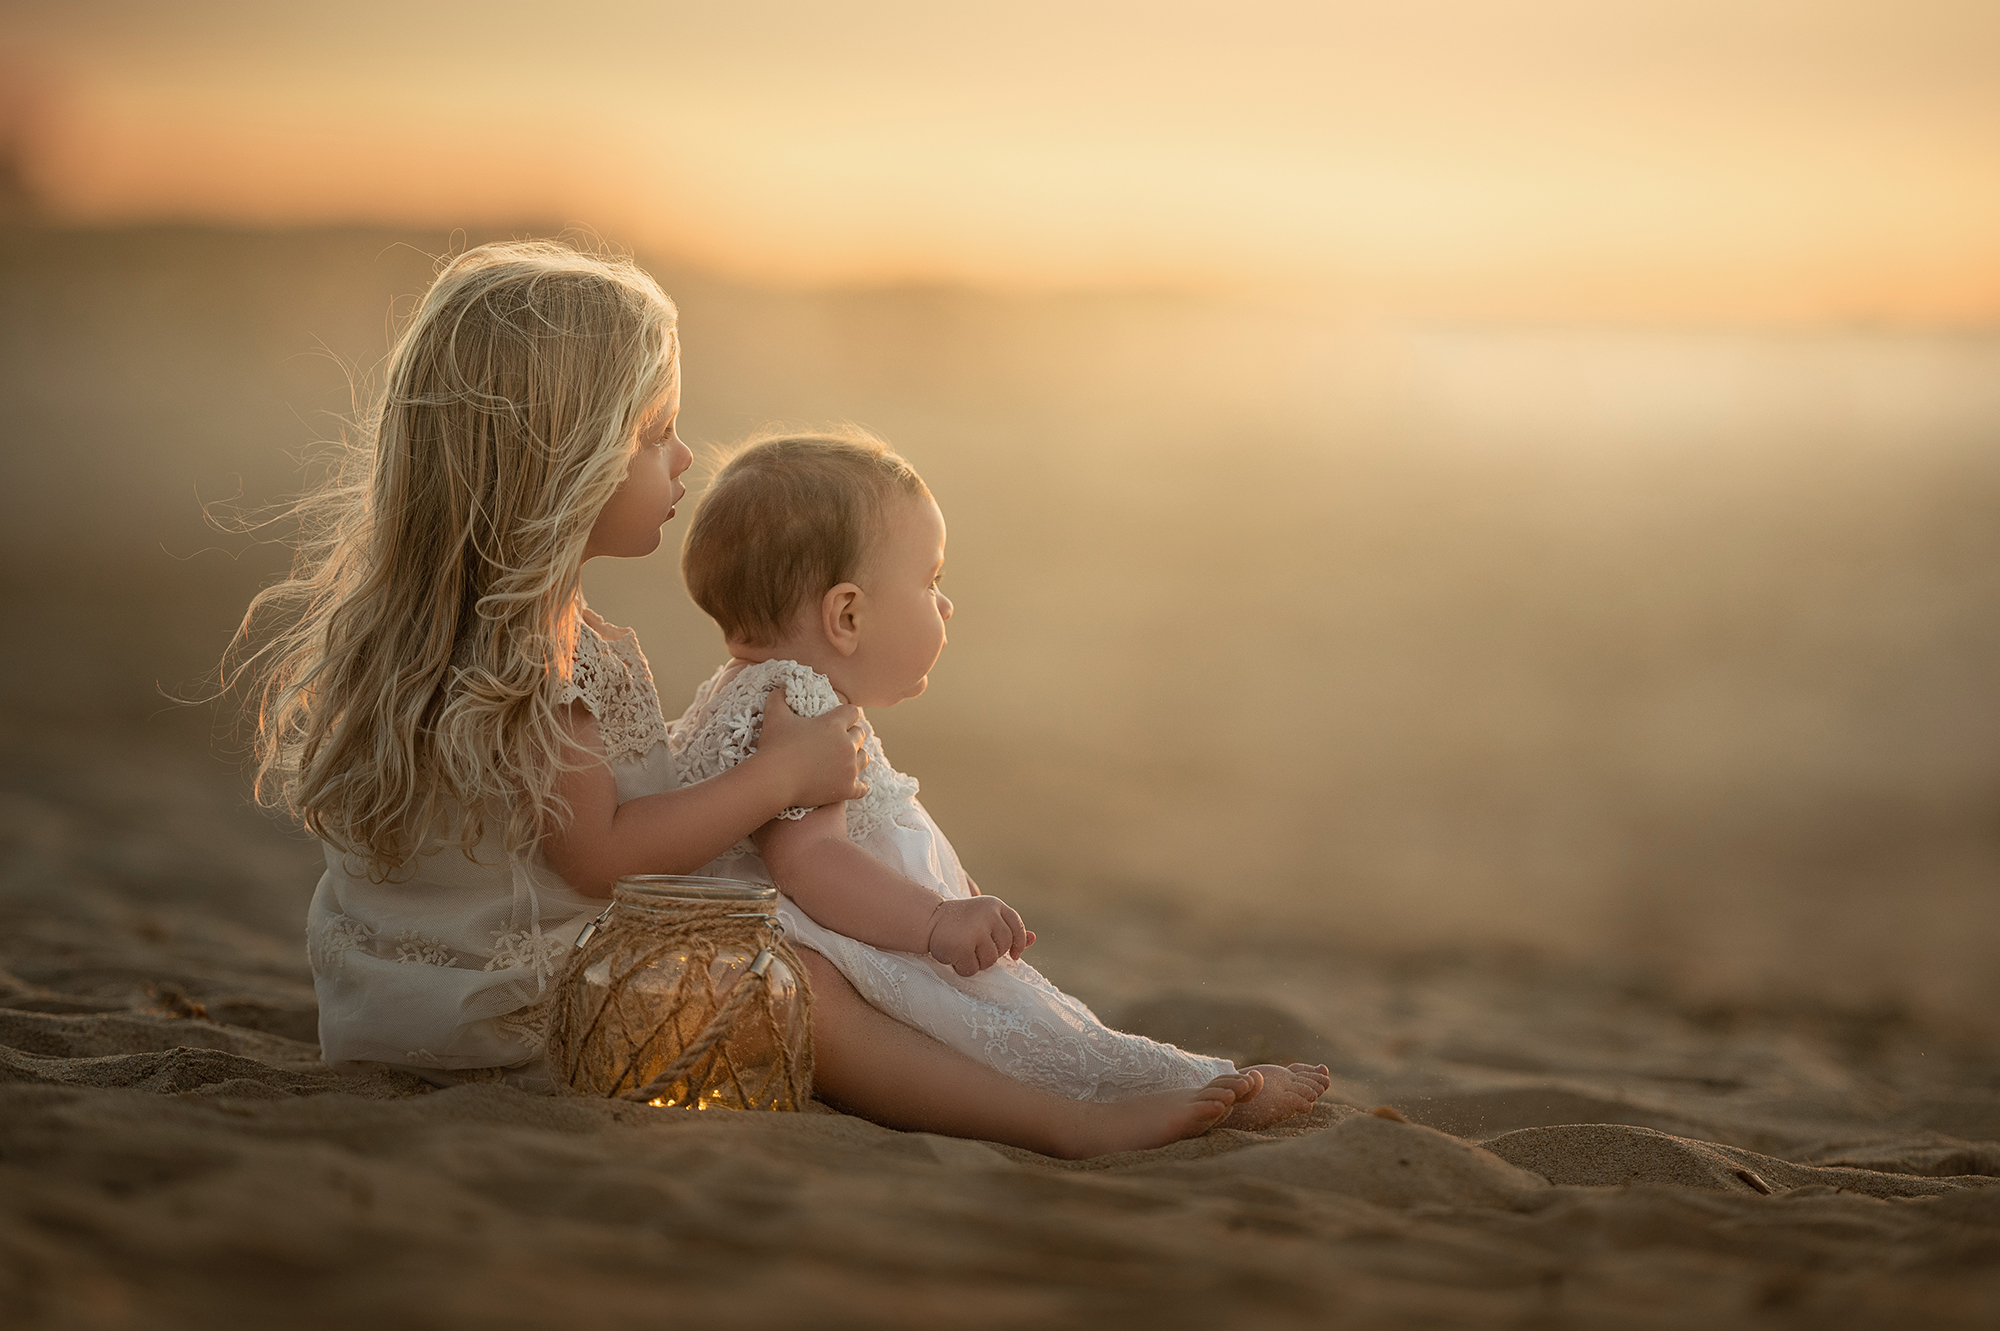 Little girls at the beach enjoying the beautiful sunset